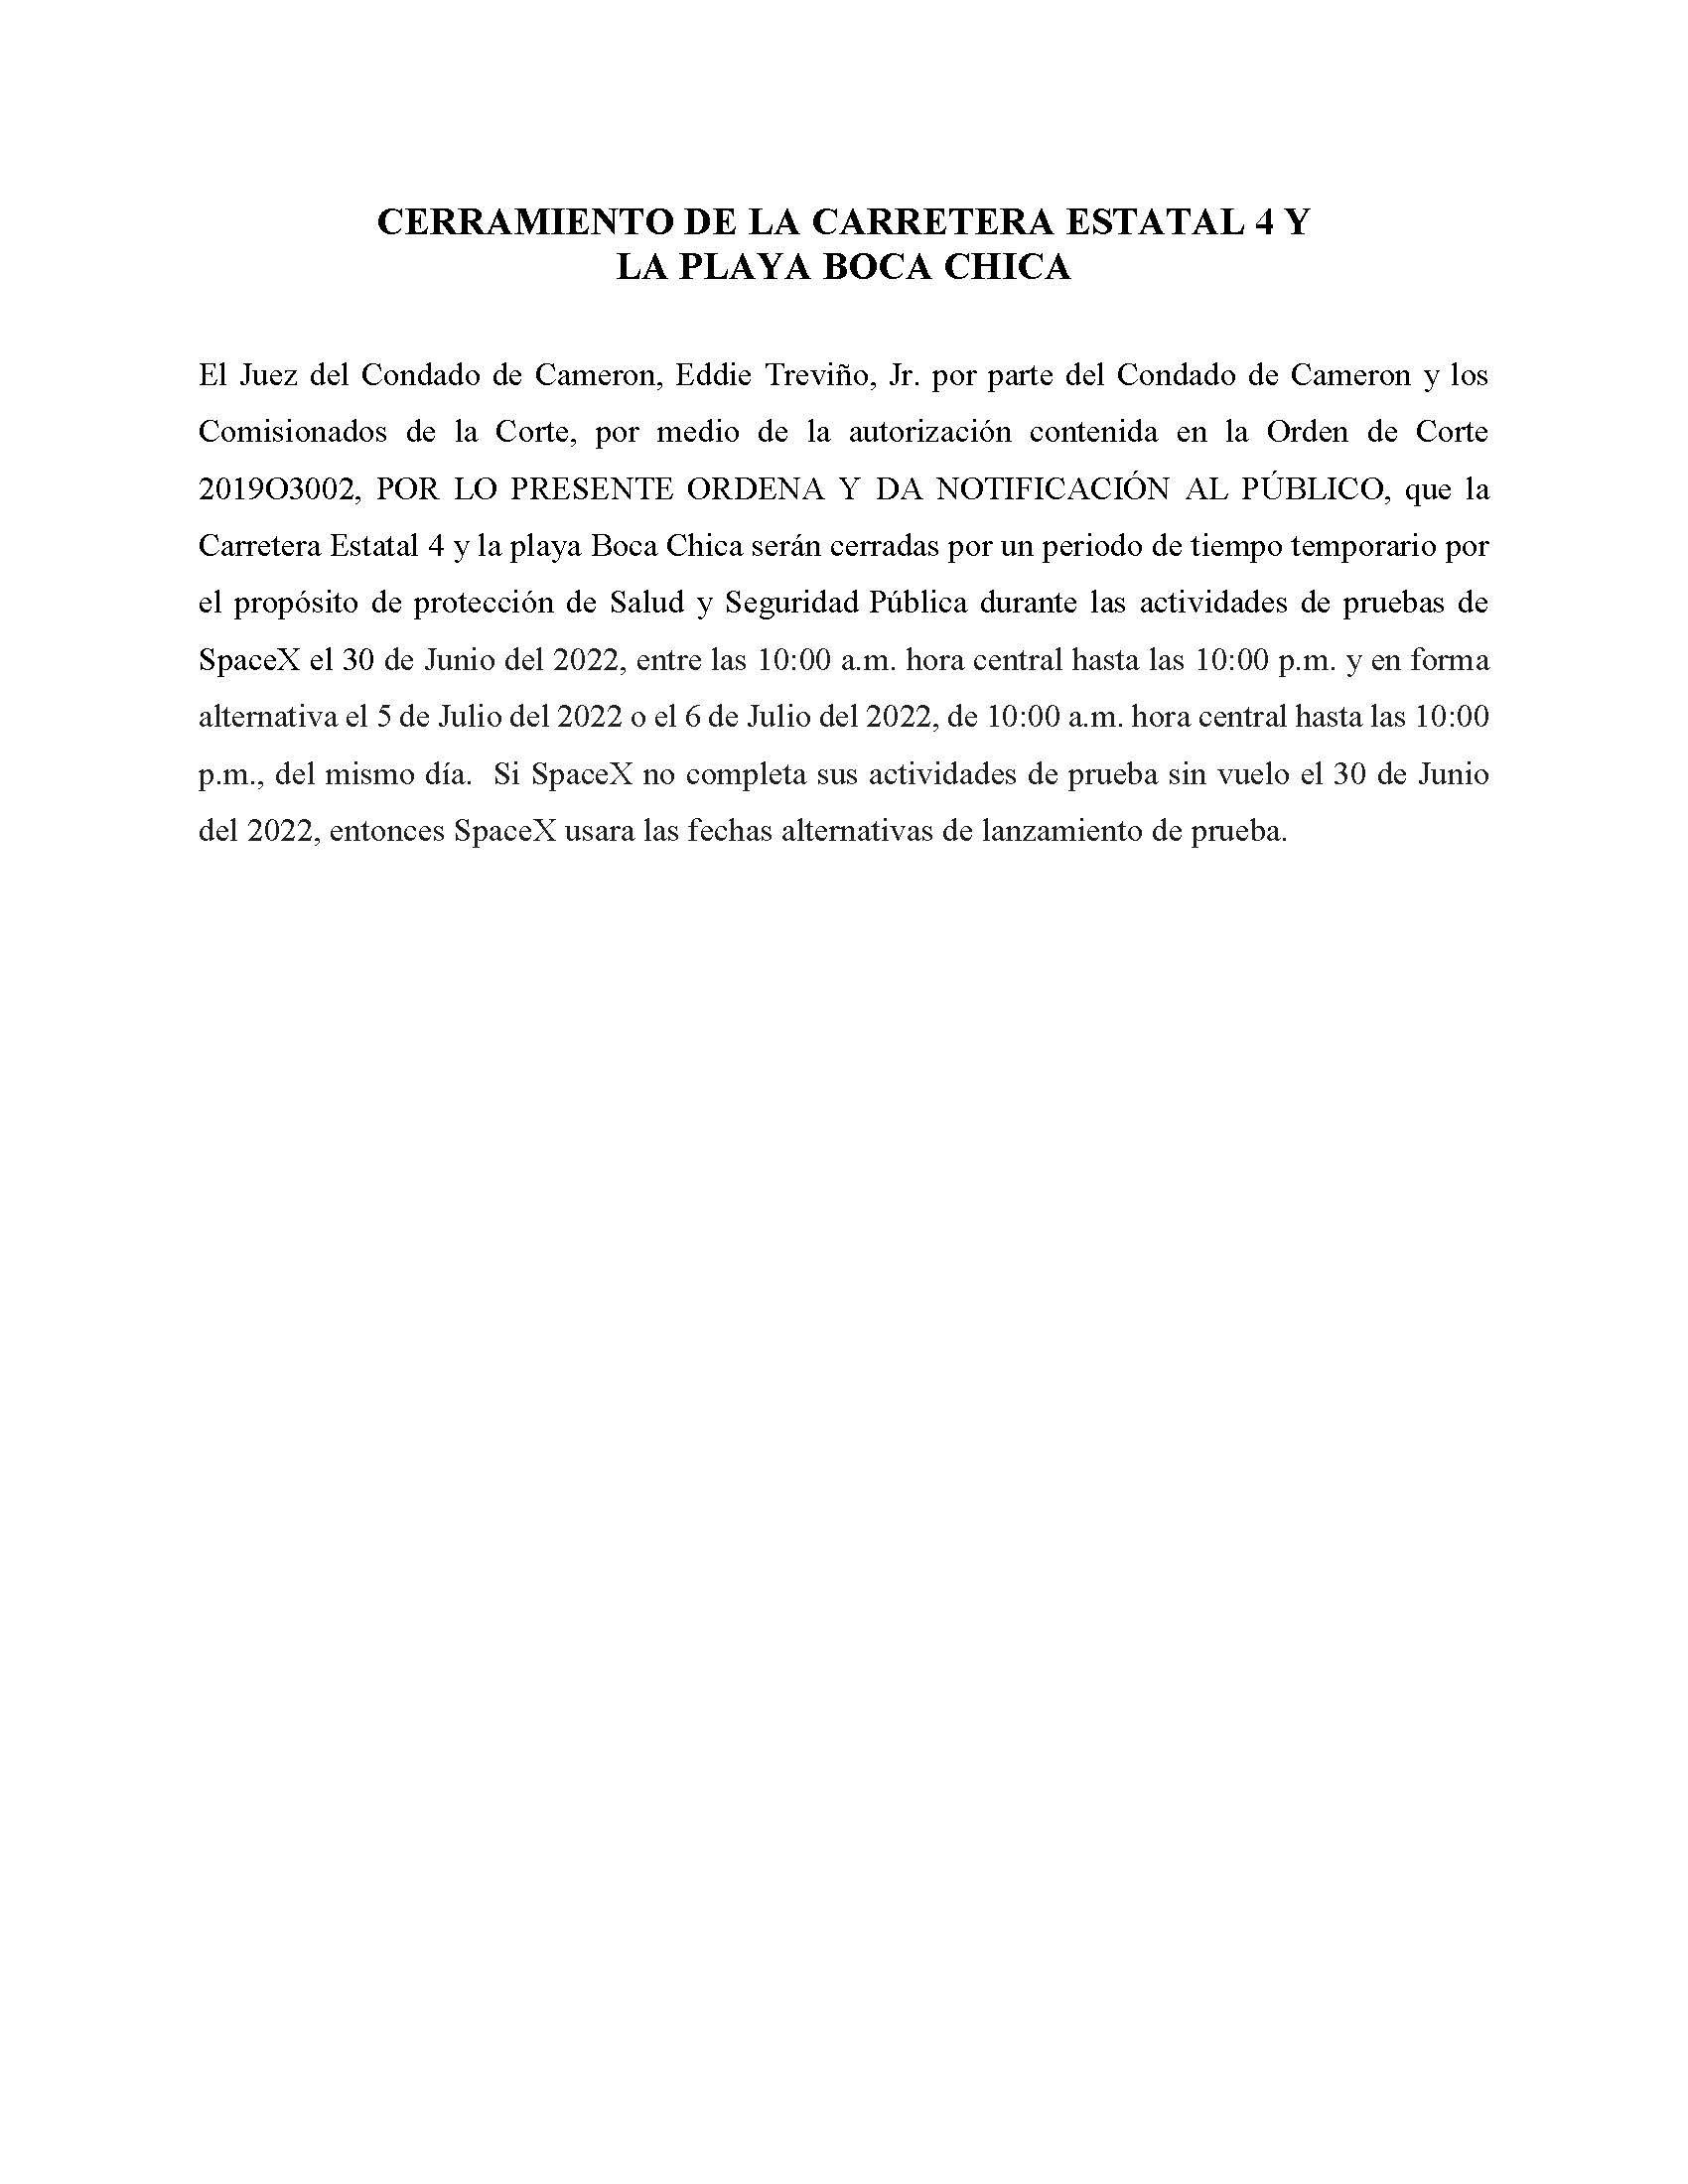 ORDER.CLOSURE OF HIGHWAY 4 Y LA PLAYA BOCA CHICA.SPANISH.06.30.2022